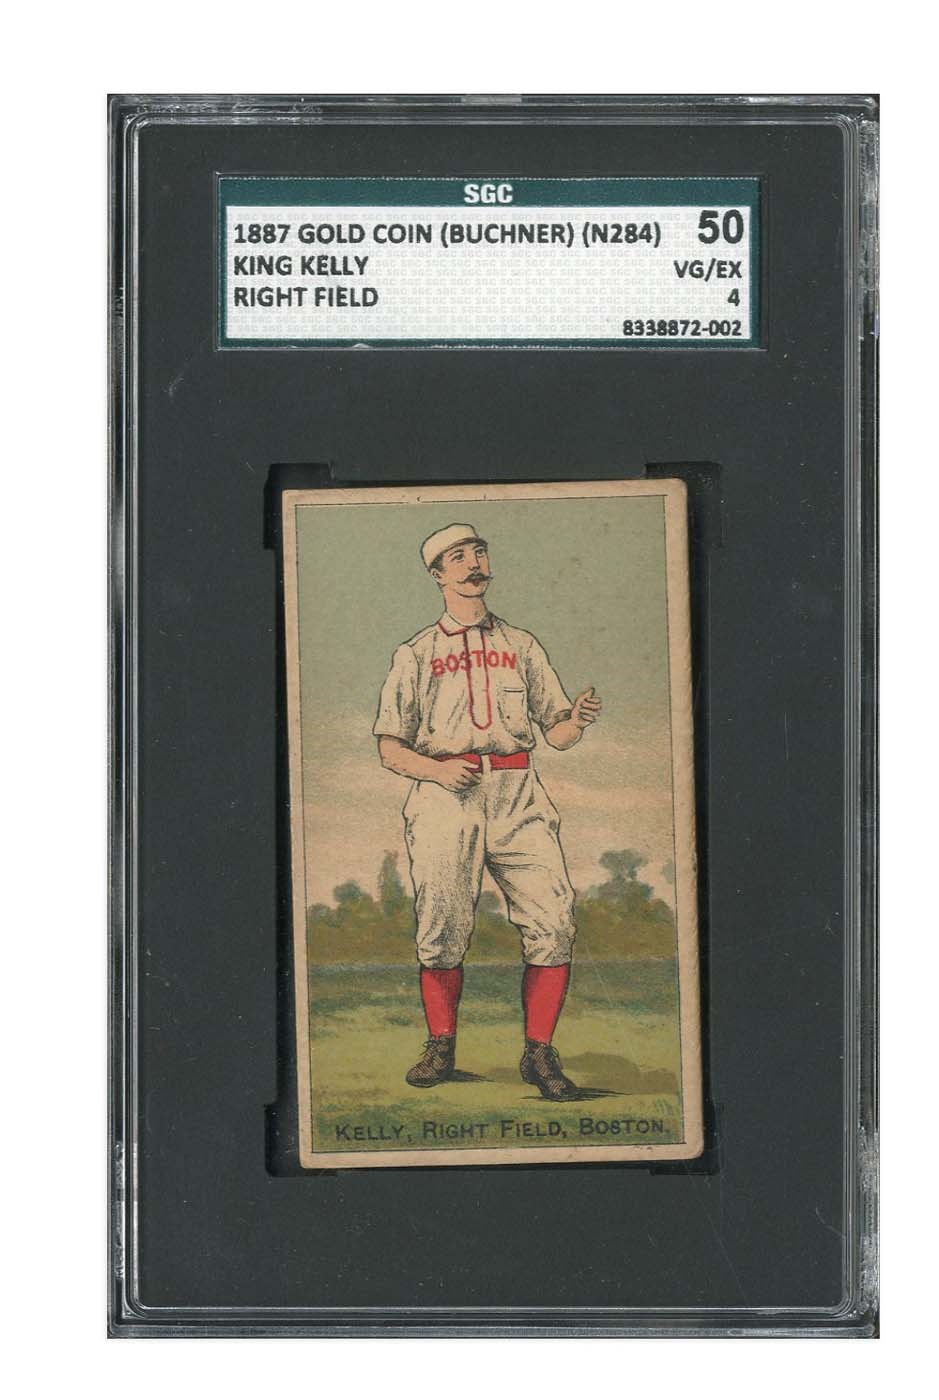 - 1887 N284 King Kelly "Right Field" Buchner Gold Coin - SGC VG/EX 50